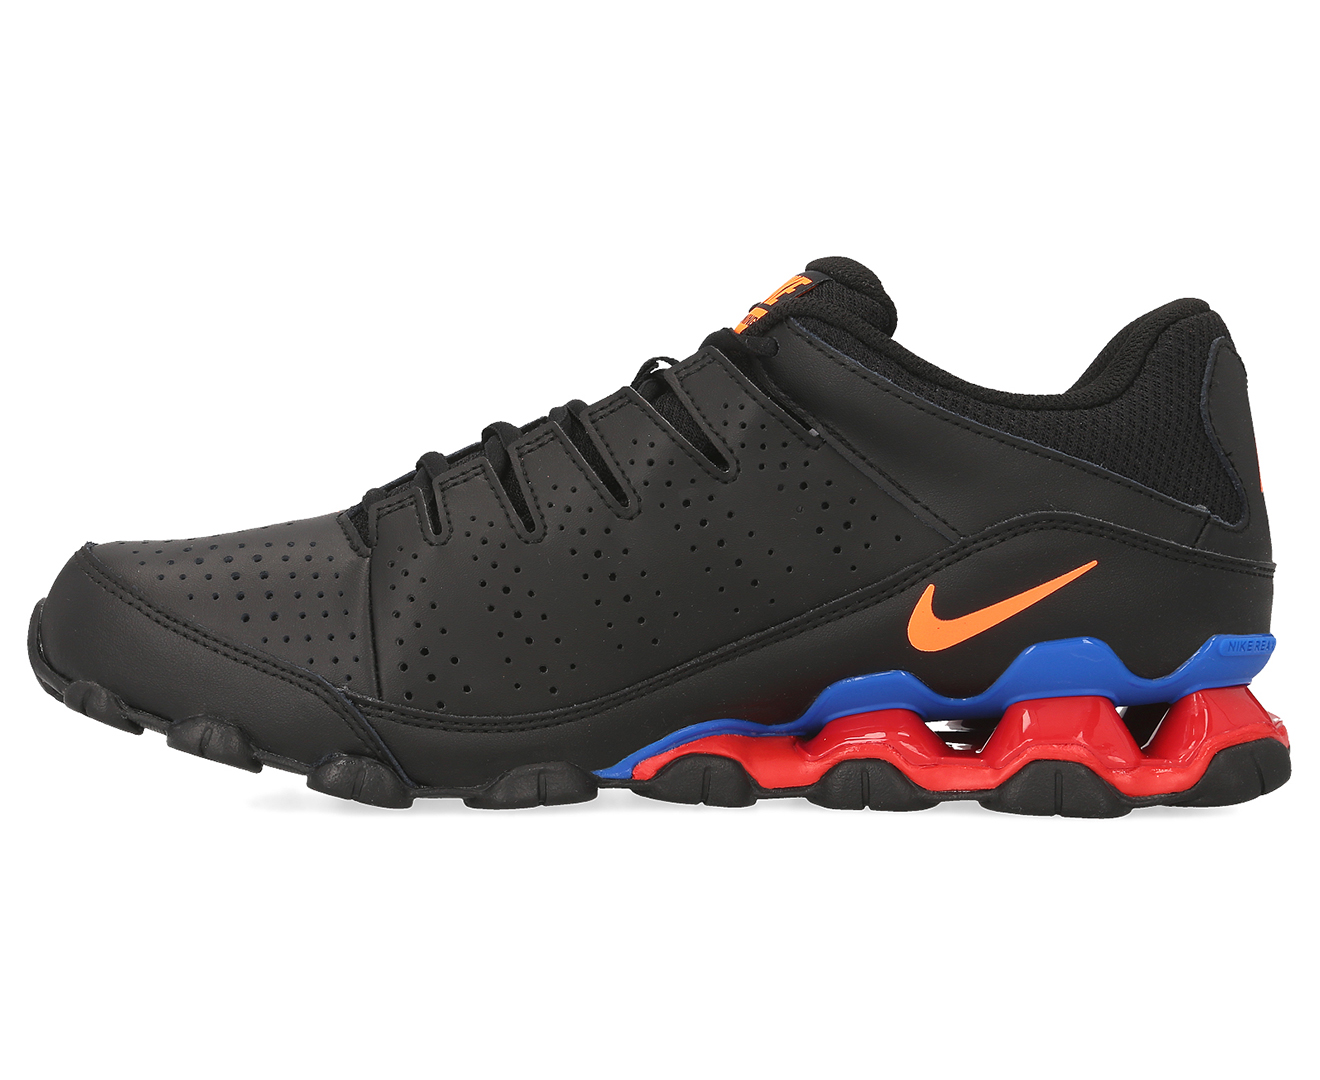 Nike Men's Reax 8 Training Shoes - Black/Total Orange | Catch.com.au